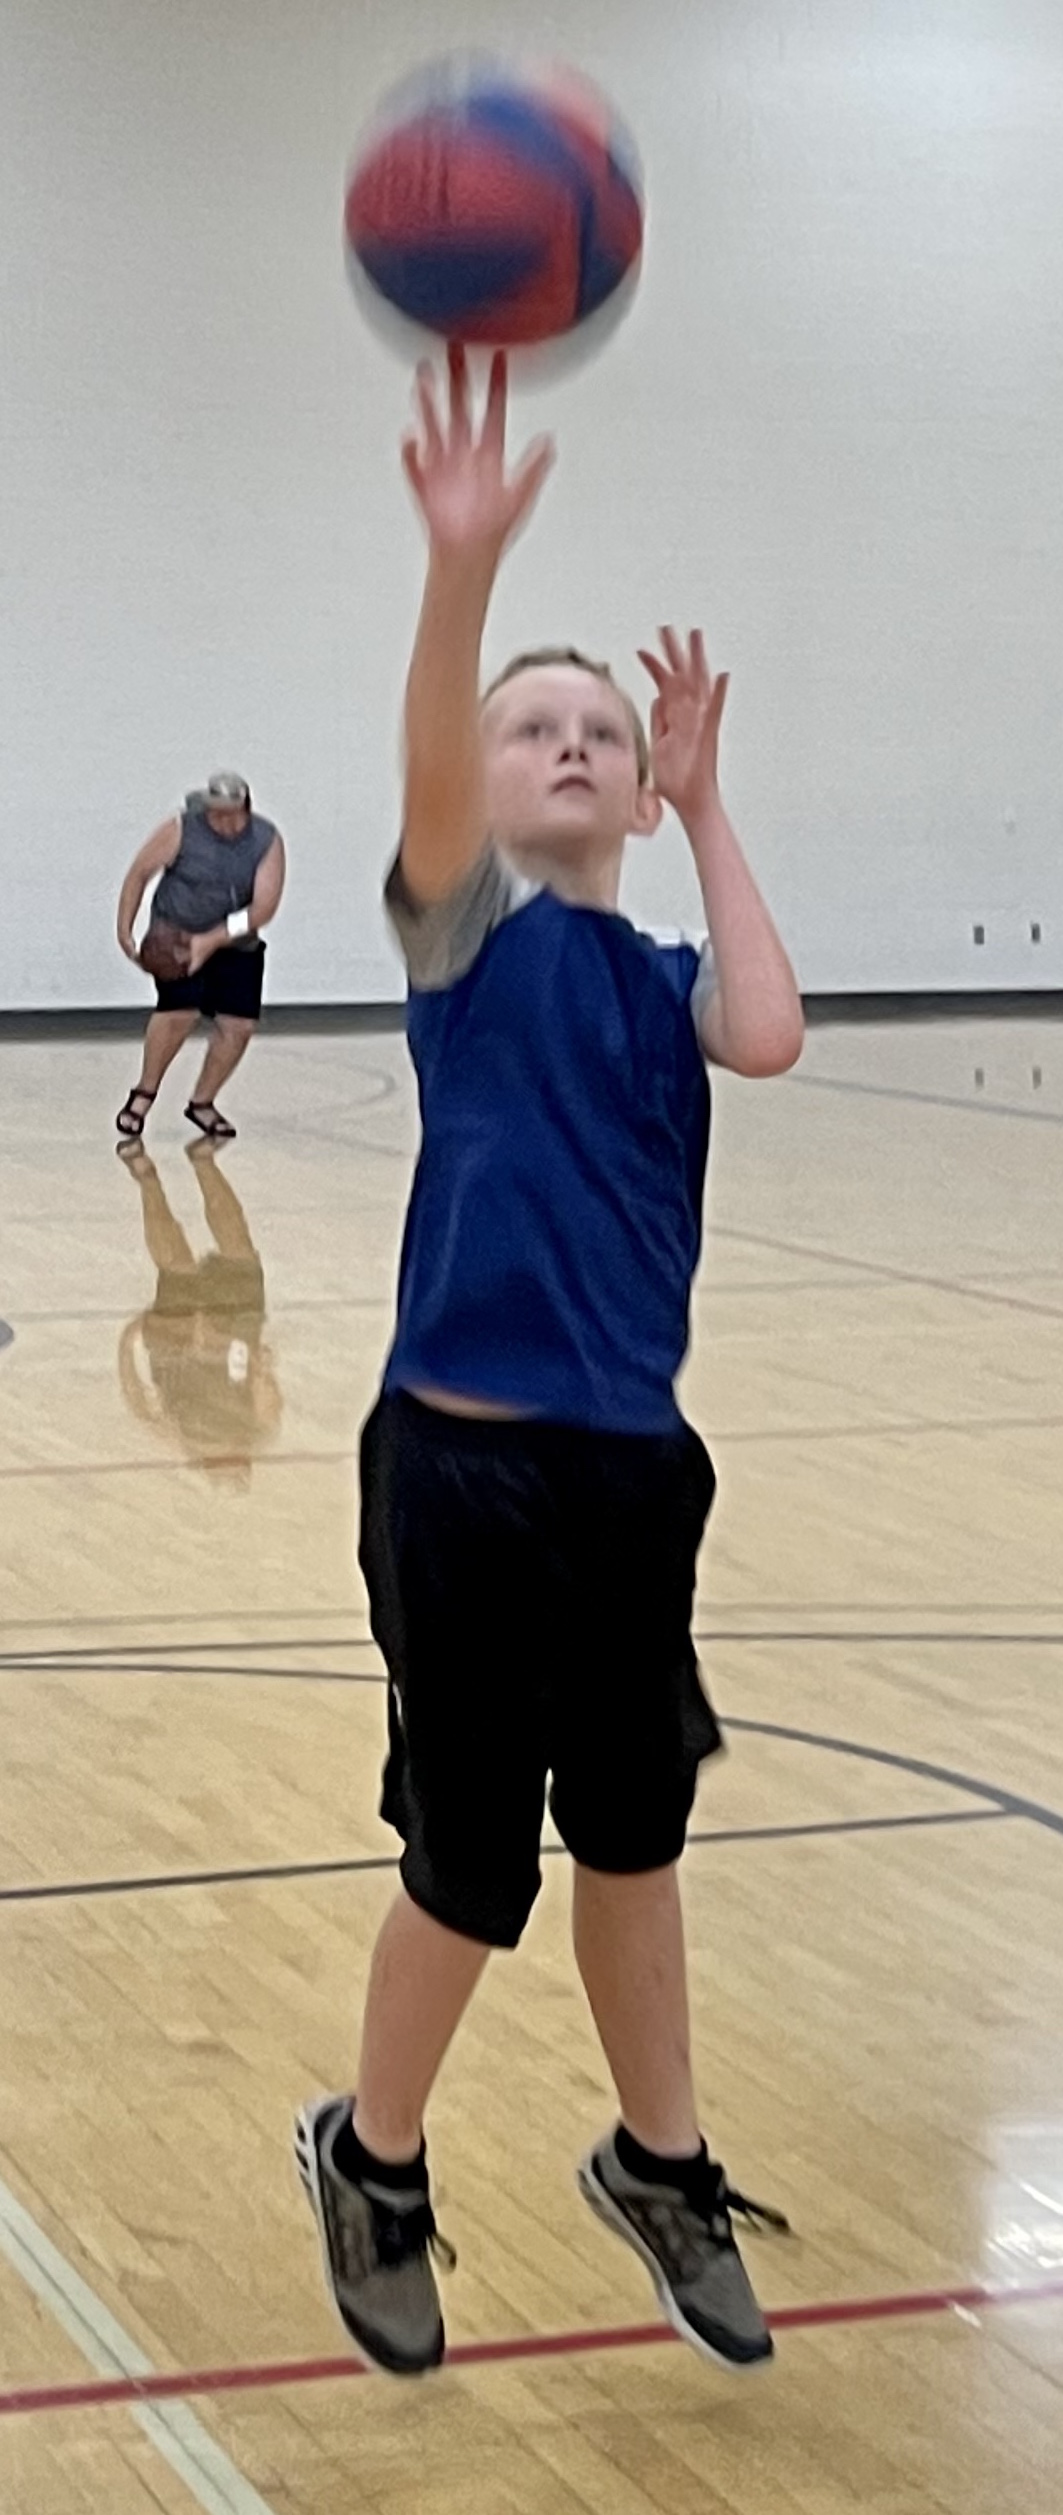 Josh playing basketball